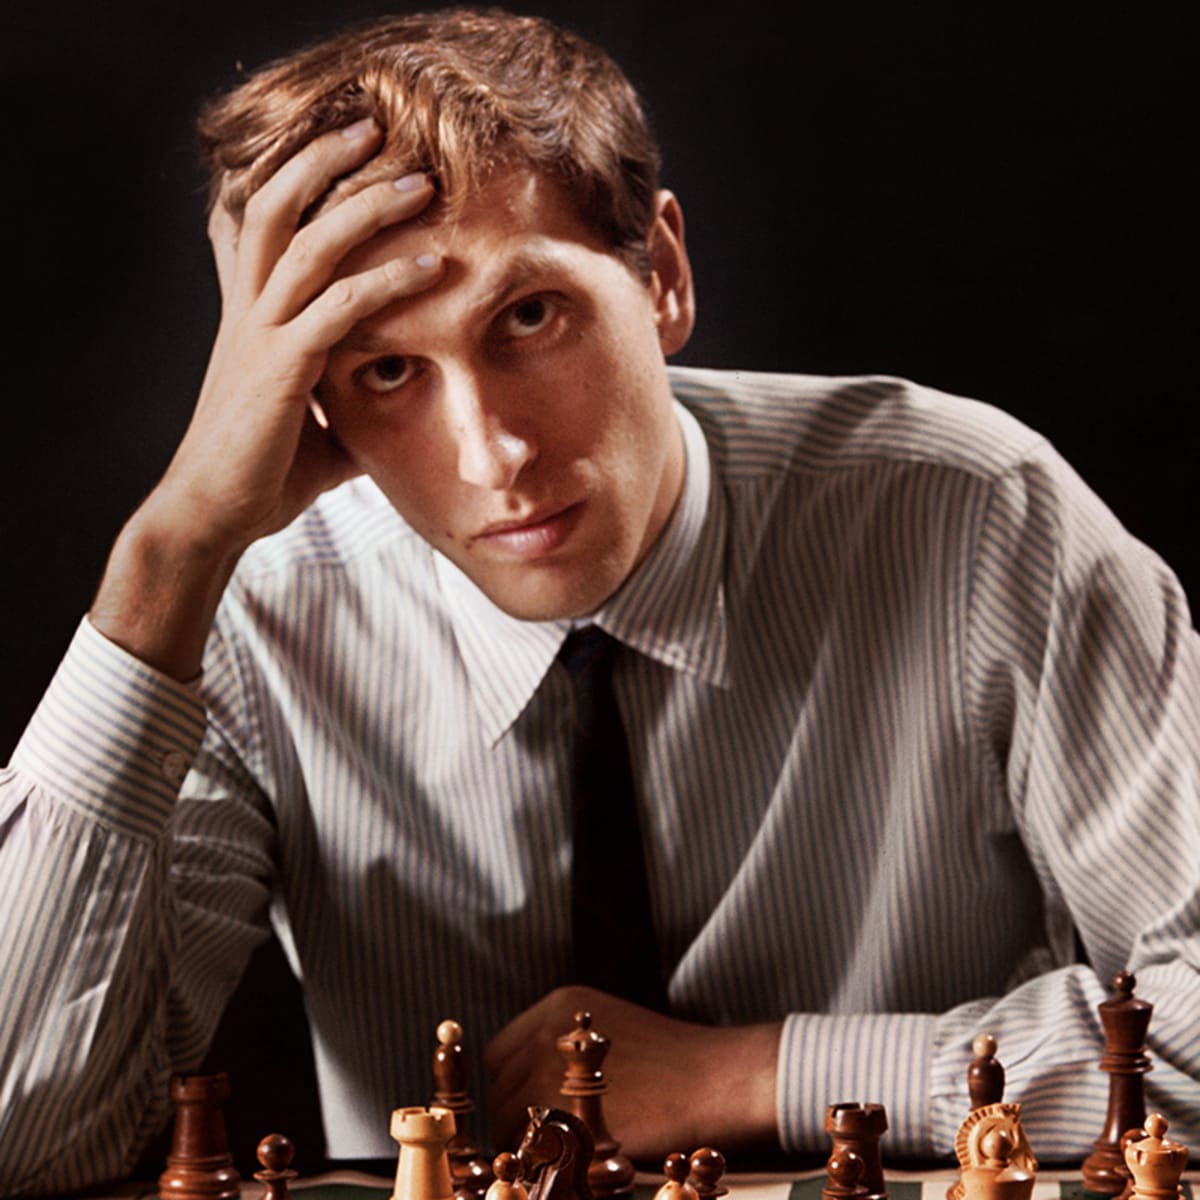 What Is Bobby Fischer's IQ? - ChessEasy